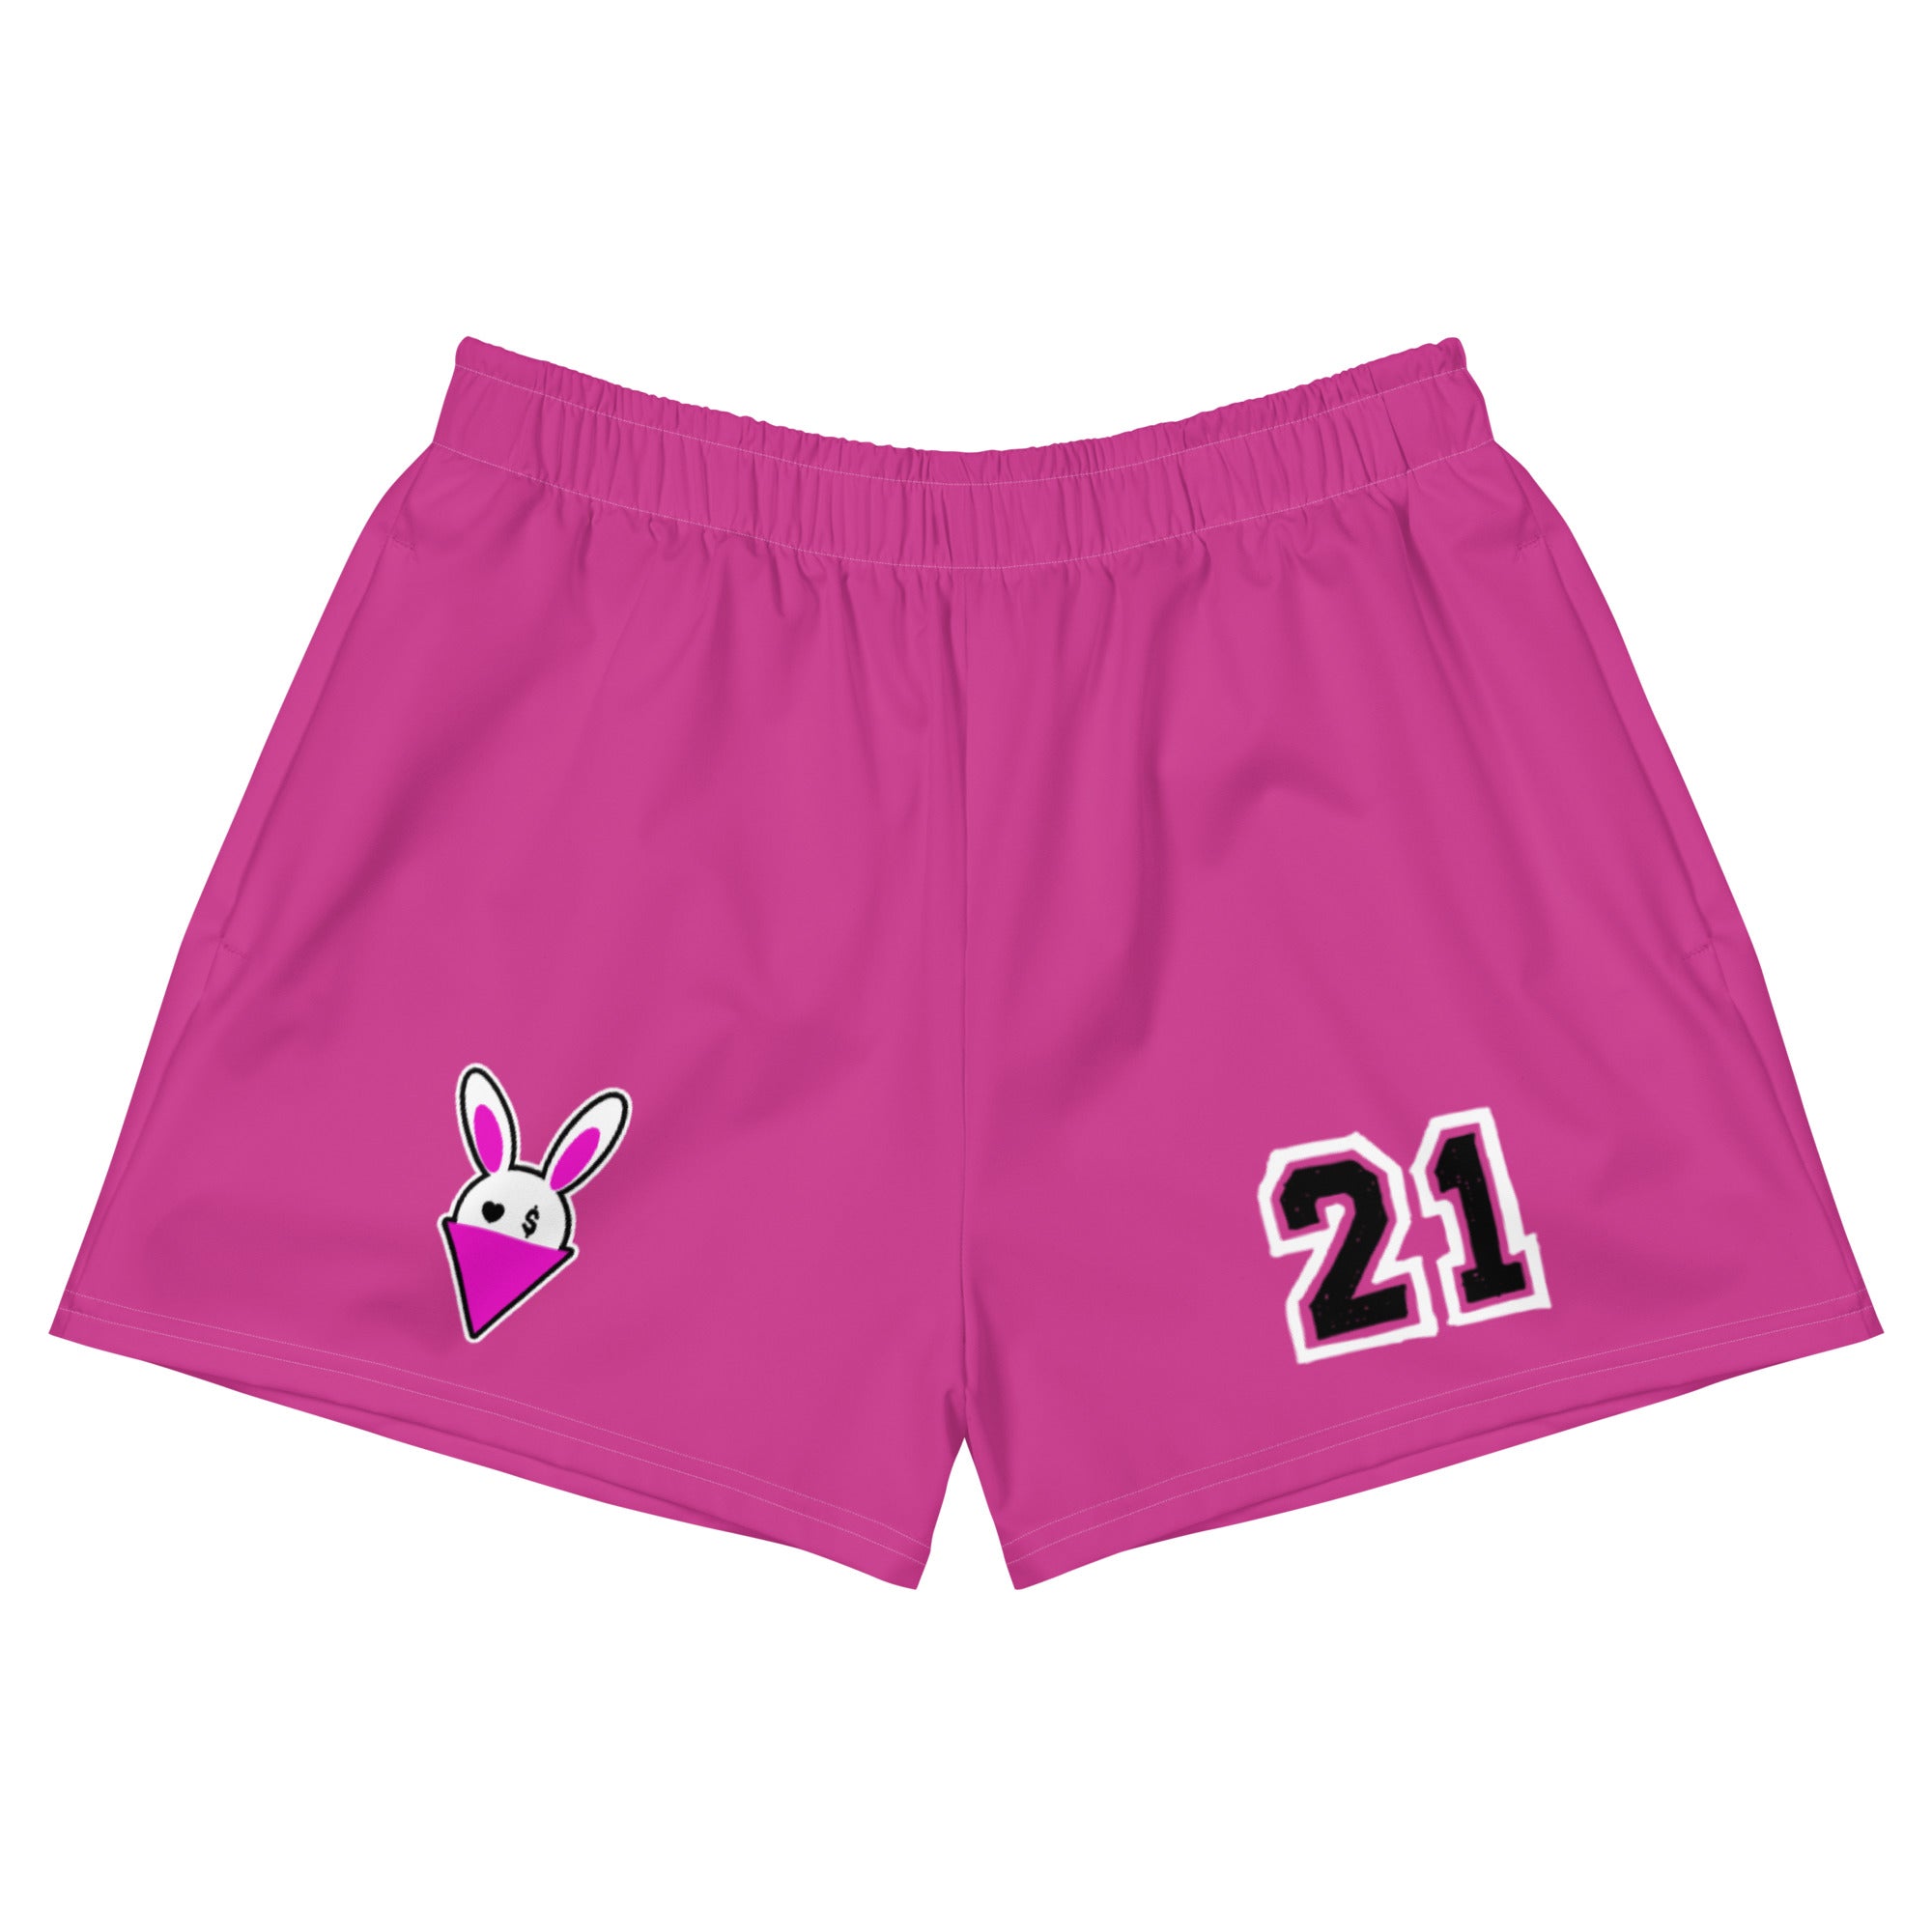 BUNNII GANG "TEAM BUNNII" Pink Athletic Shorts